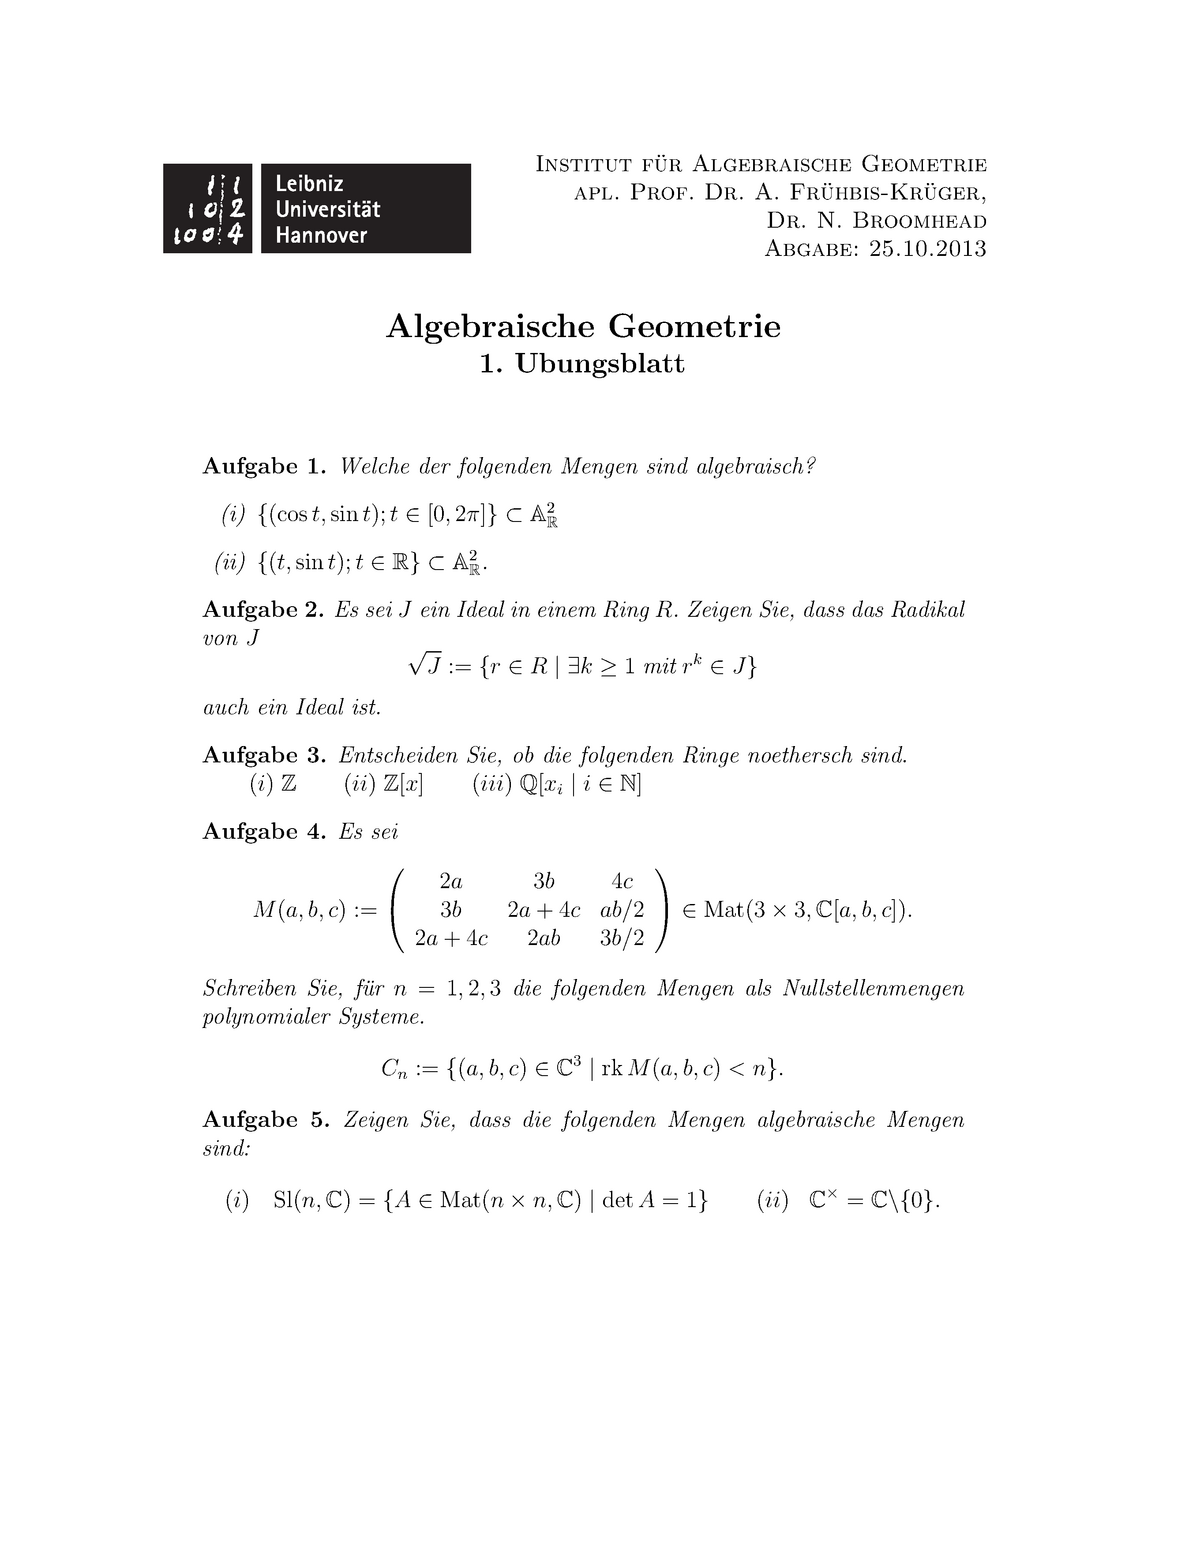 Algebraische Geometrie Fruhbis Kruger Schutt 14 Hausuebung 01 Studocu